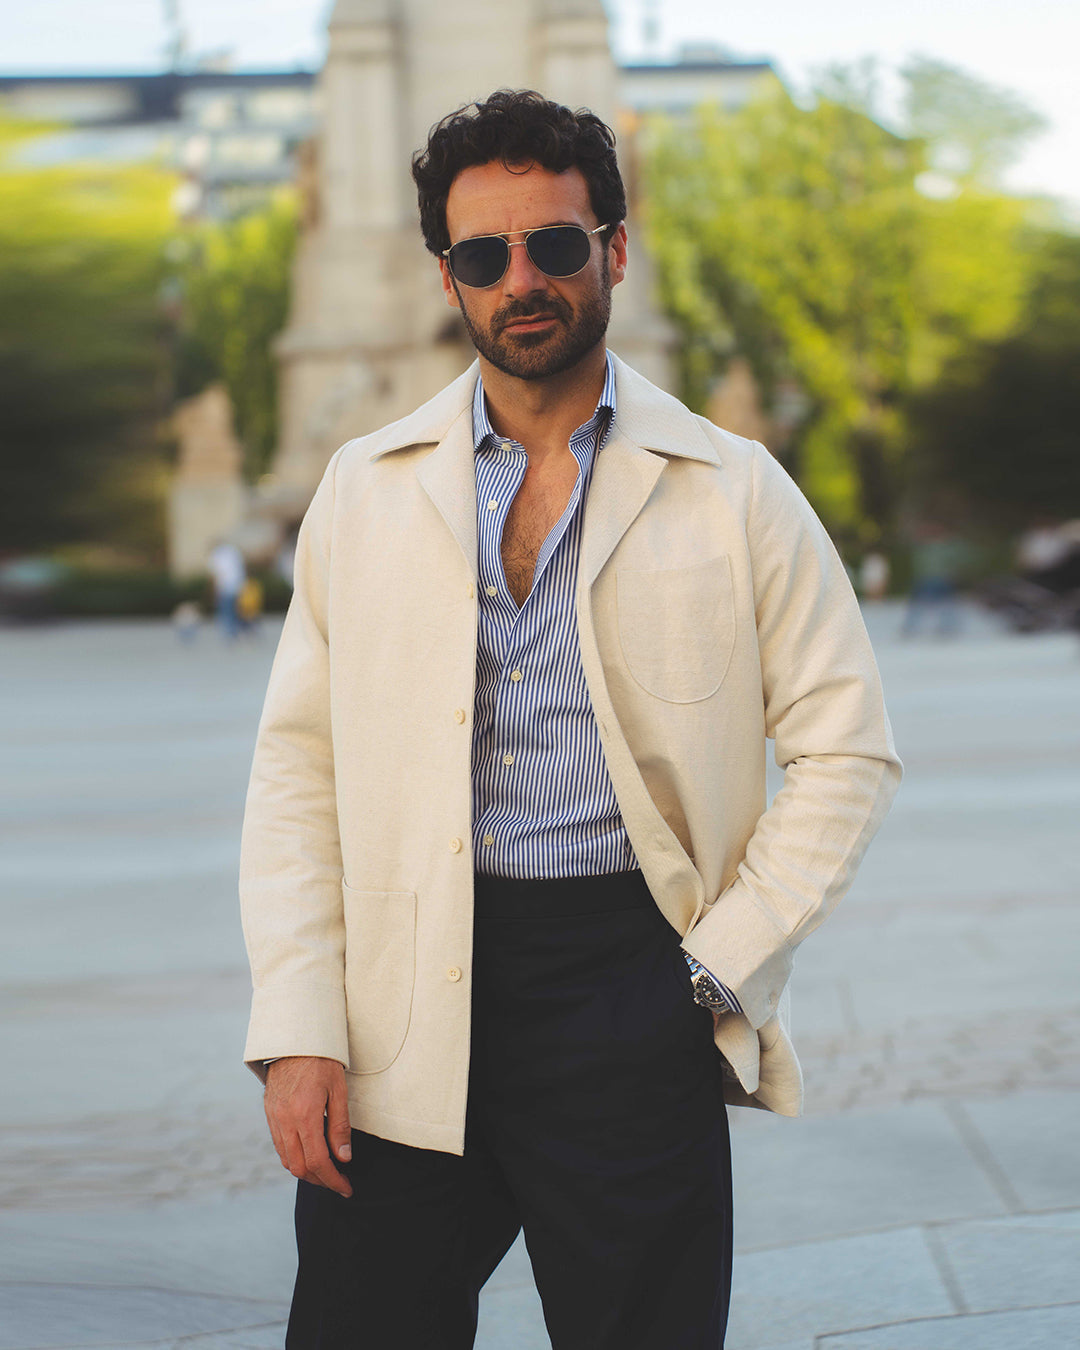 Model outside wearing the linen shirt jacket for men by Luxire in cream wearing sunglasses 2